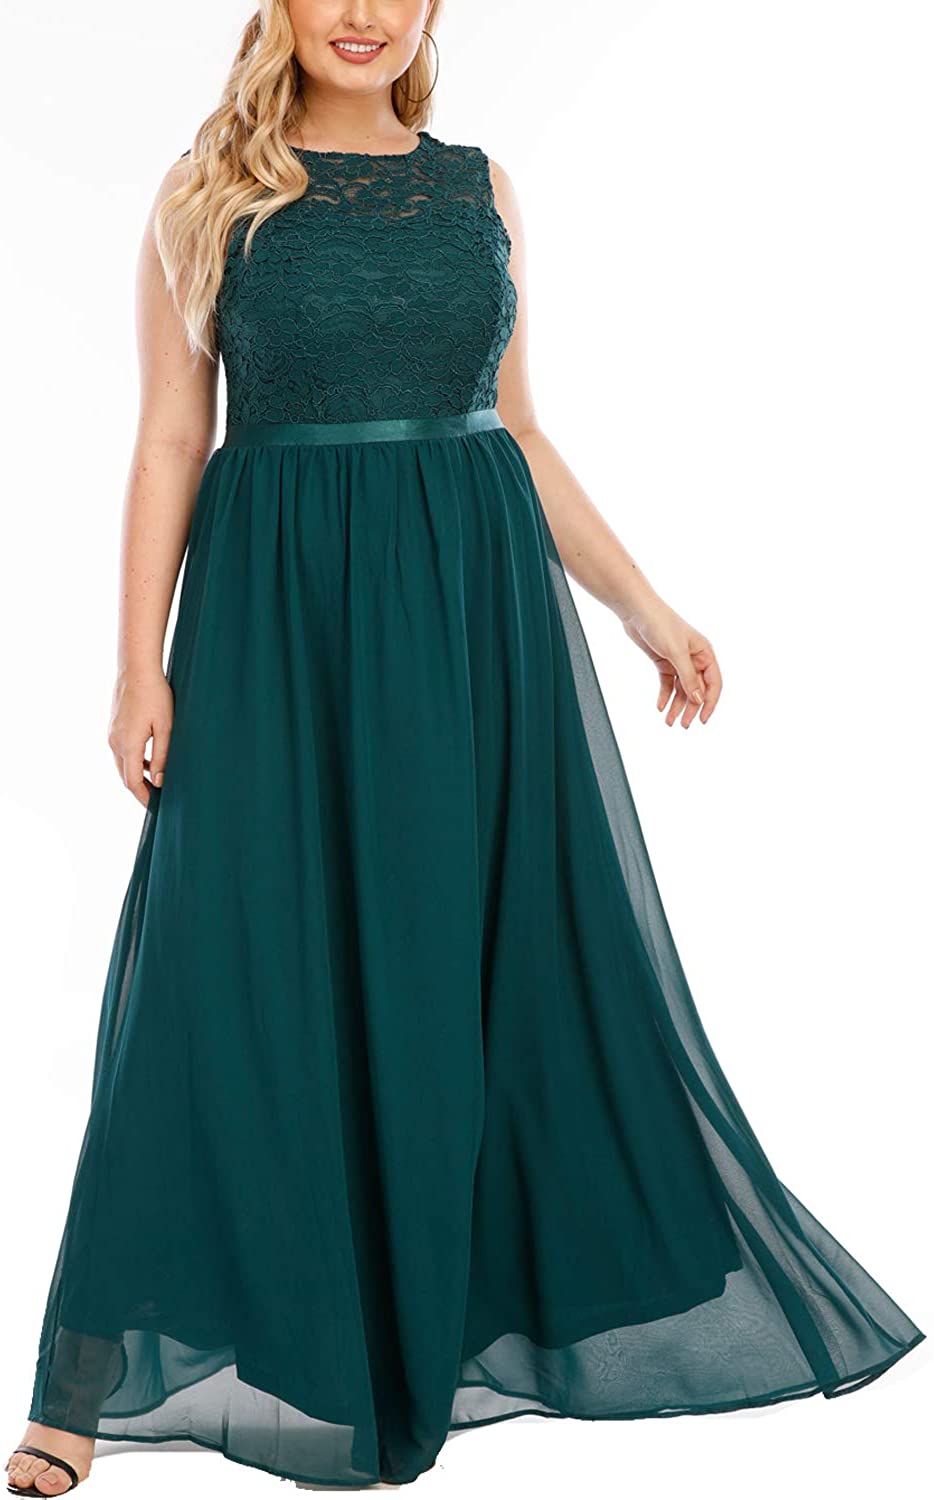 Womens Fashion Sleeveless Lace Chiffon Fit Flare Elegant Cocktail Party  Dress Wh | eBay